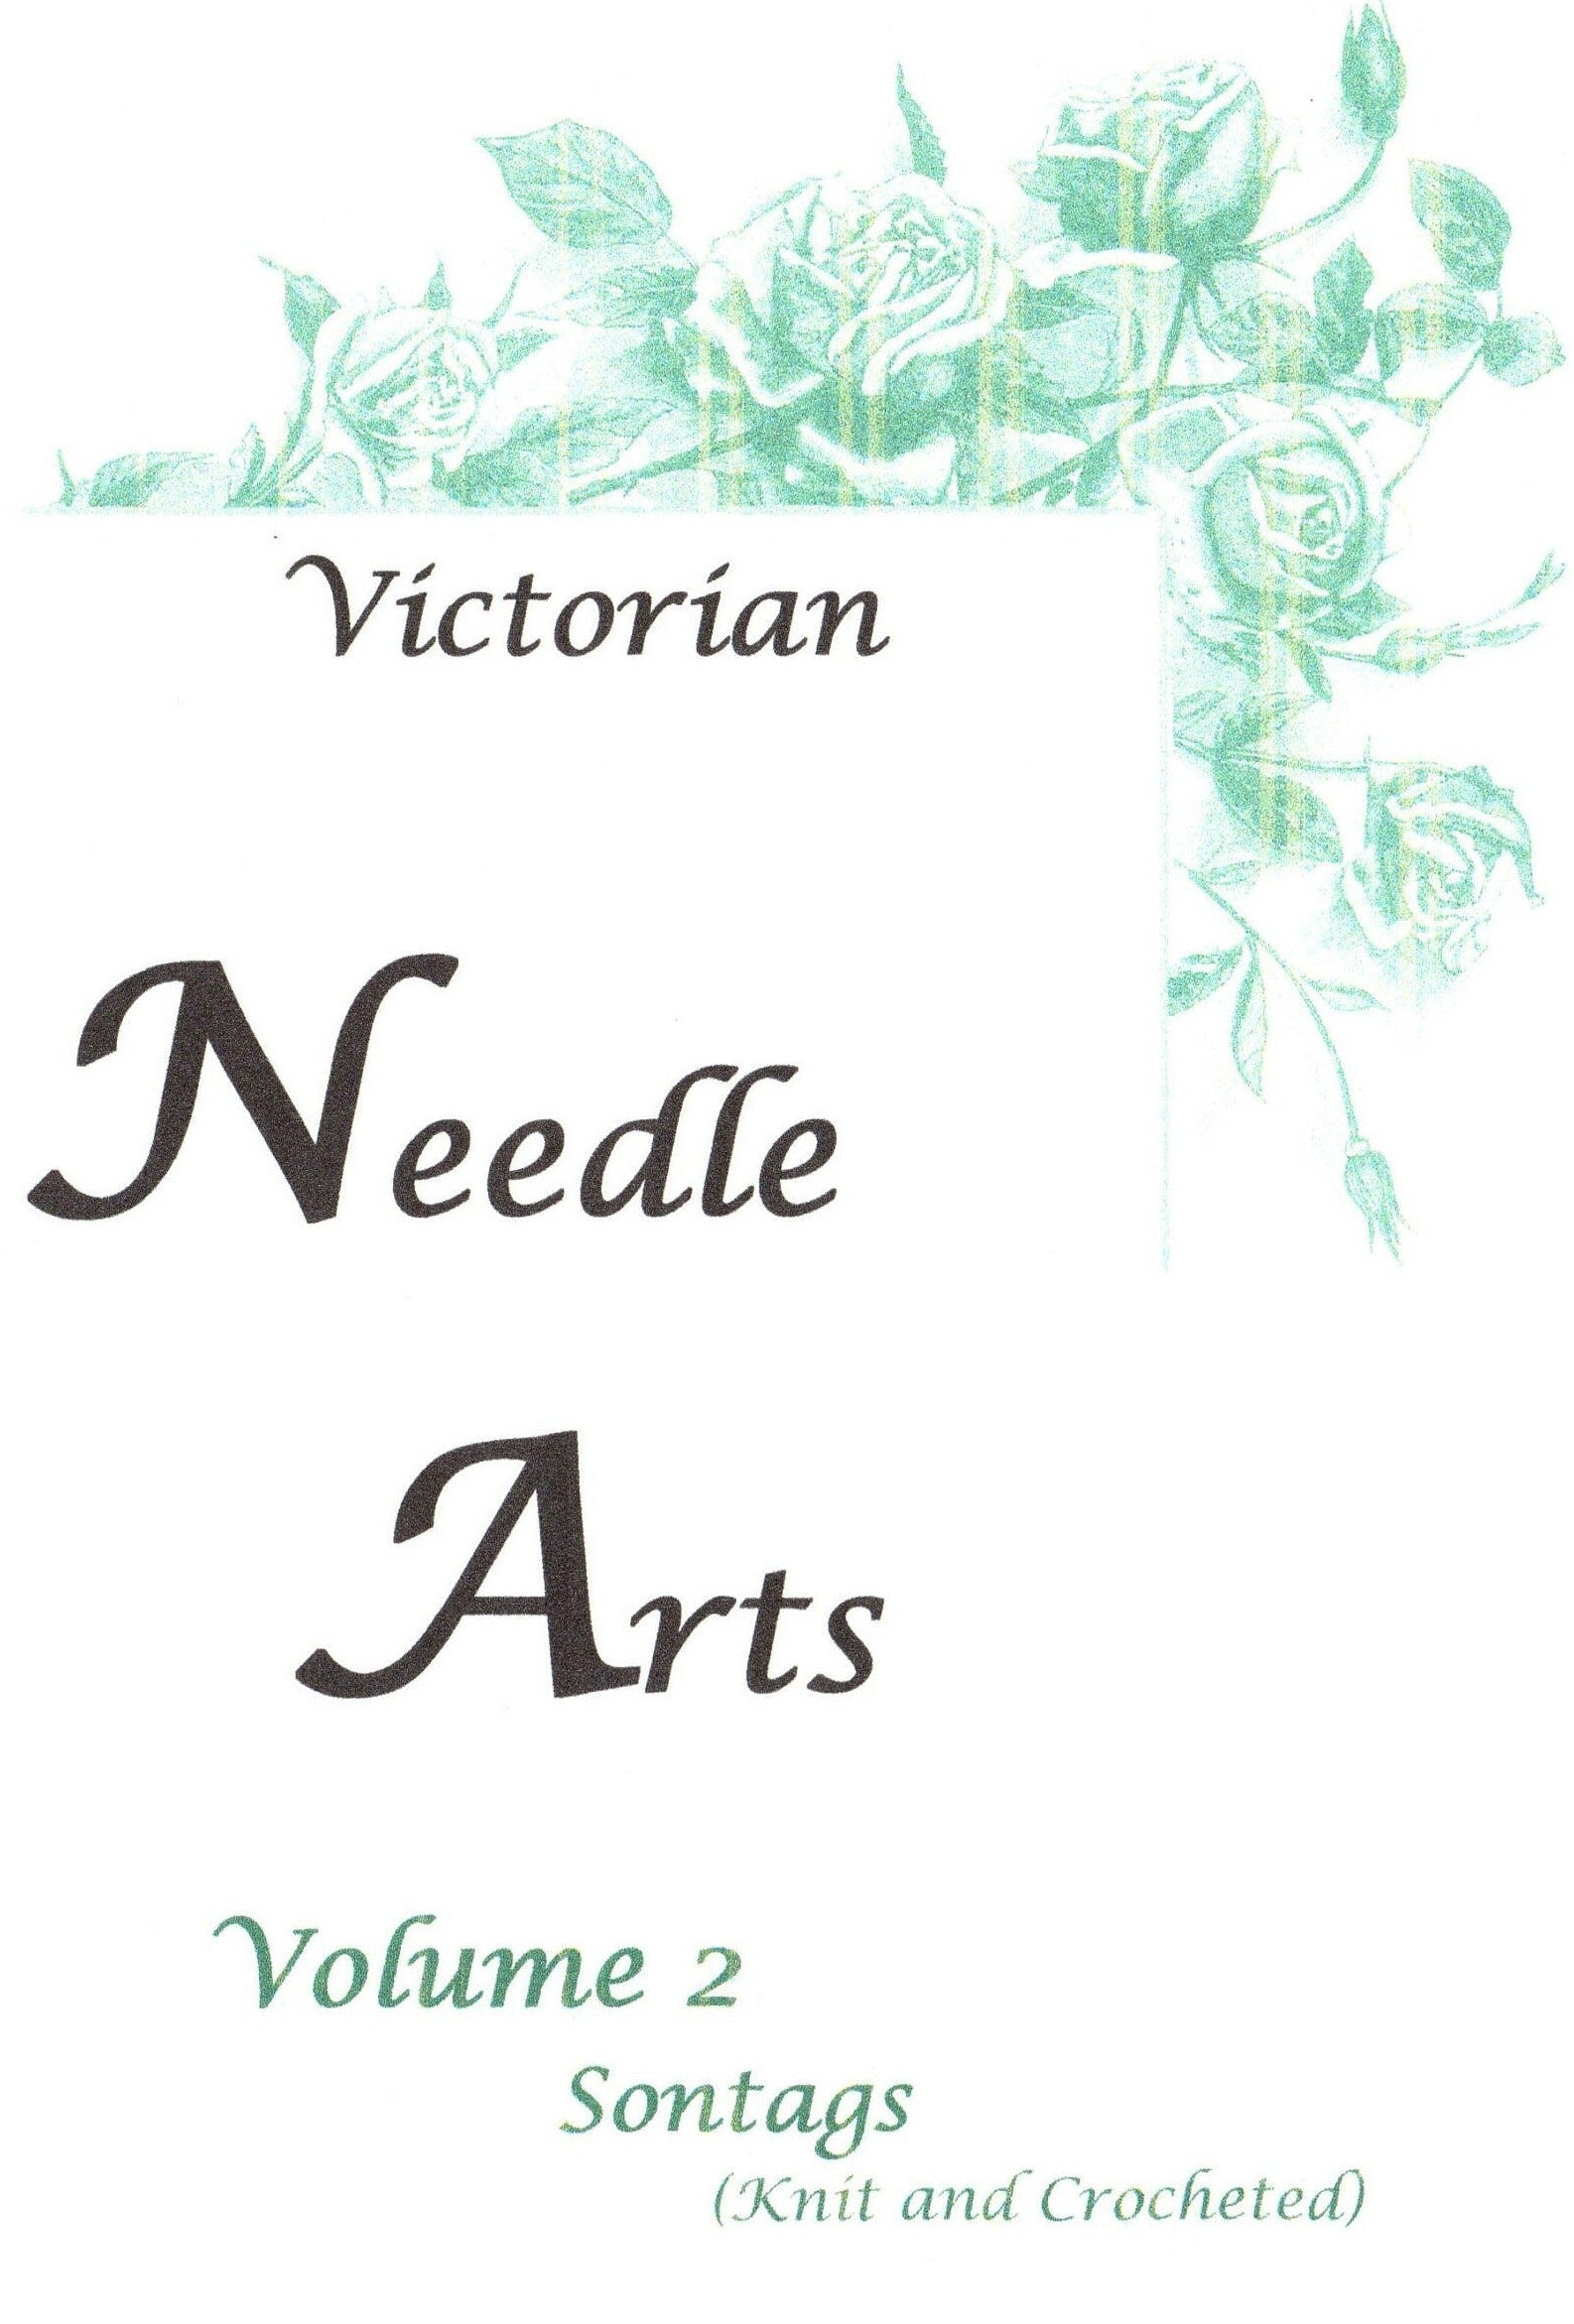 Needle Arts Volume 2 - Sontag Crochet & Knitting Pattern Booklet